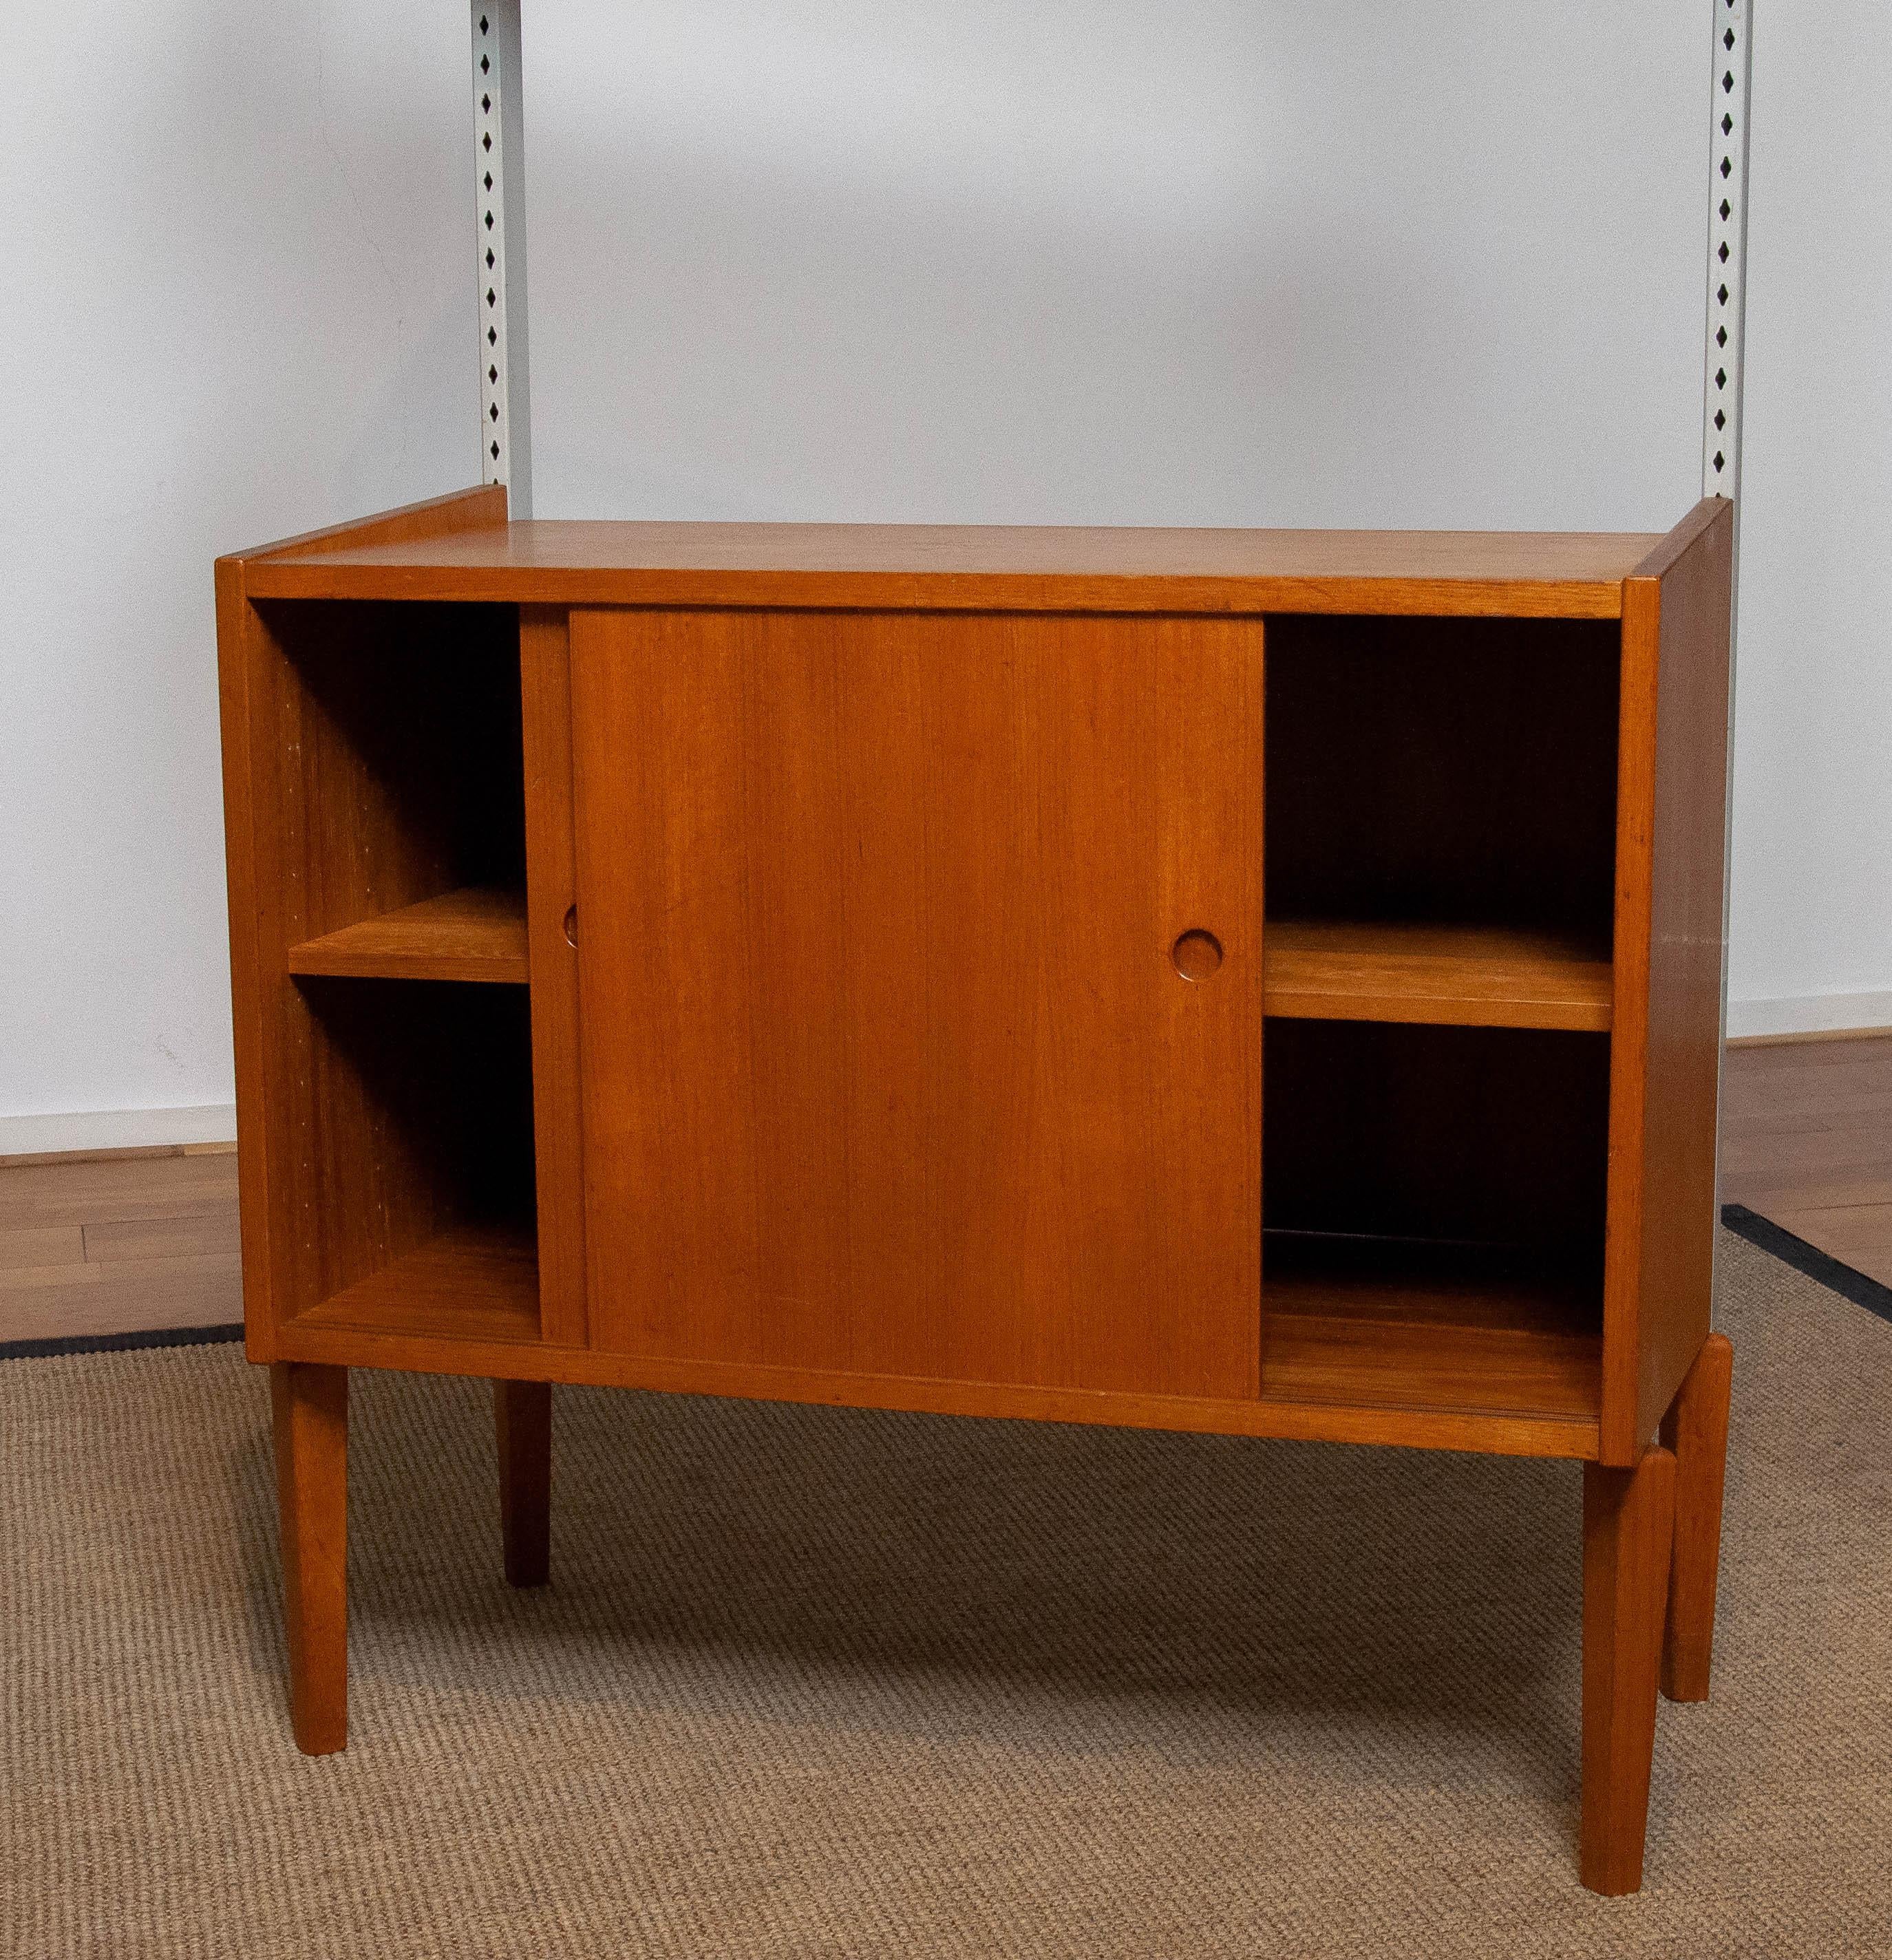 Veneer 1950's Teak Shelf System / Bookcase in Teak with Steel Bars by Harald Lundqvist For Sale